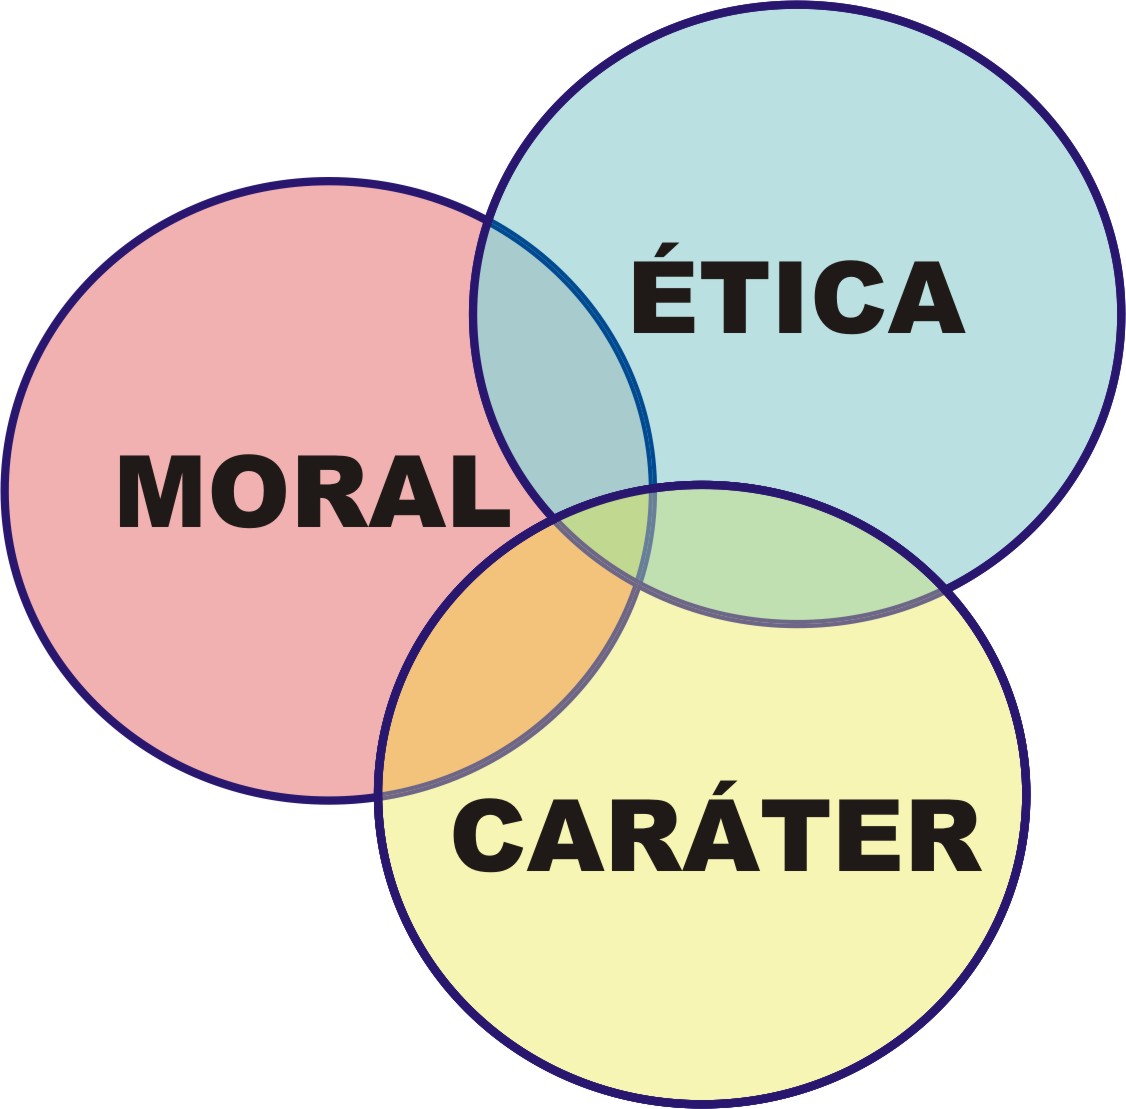 eticacarater-e-moral